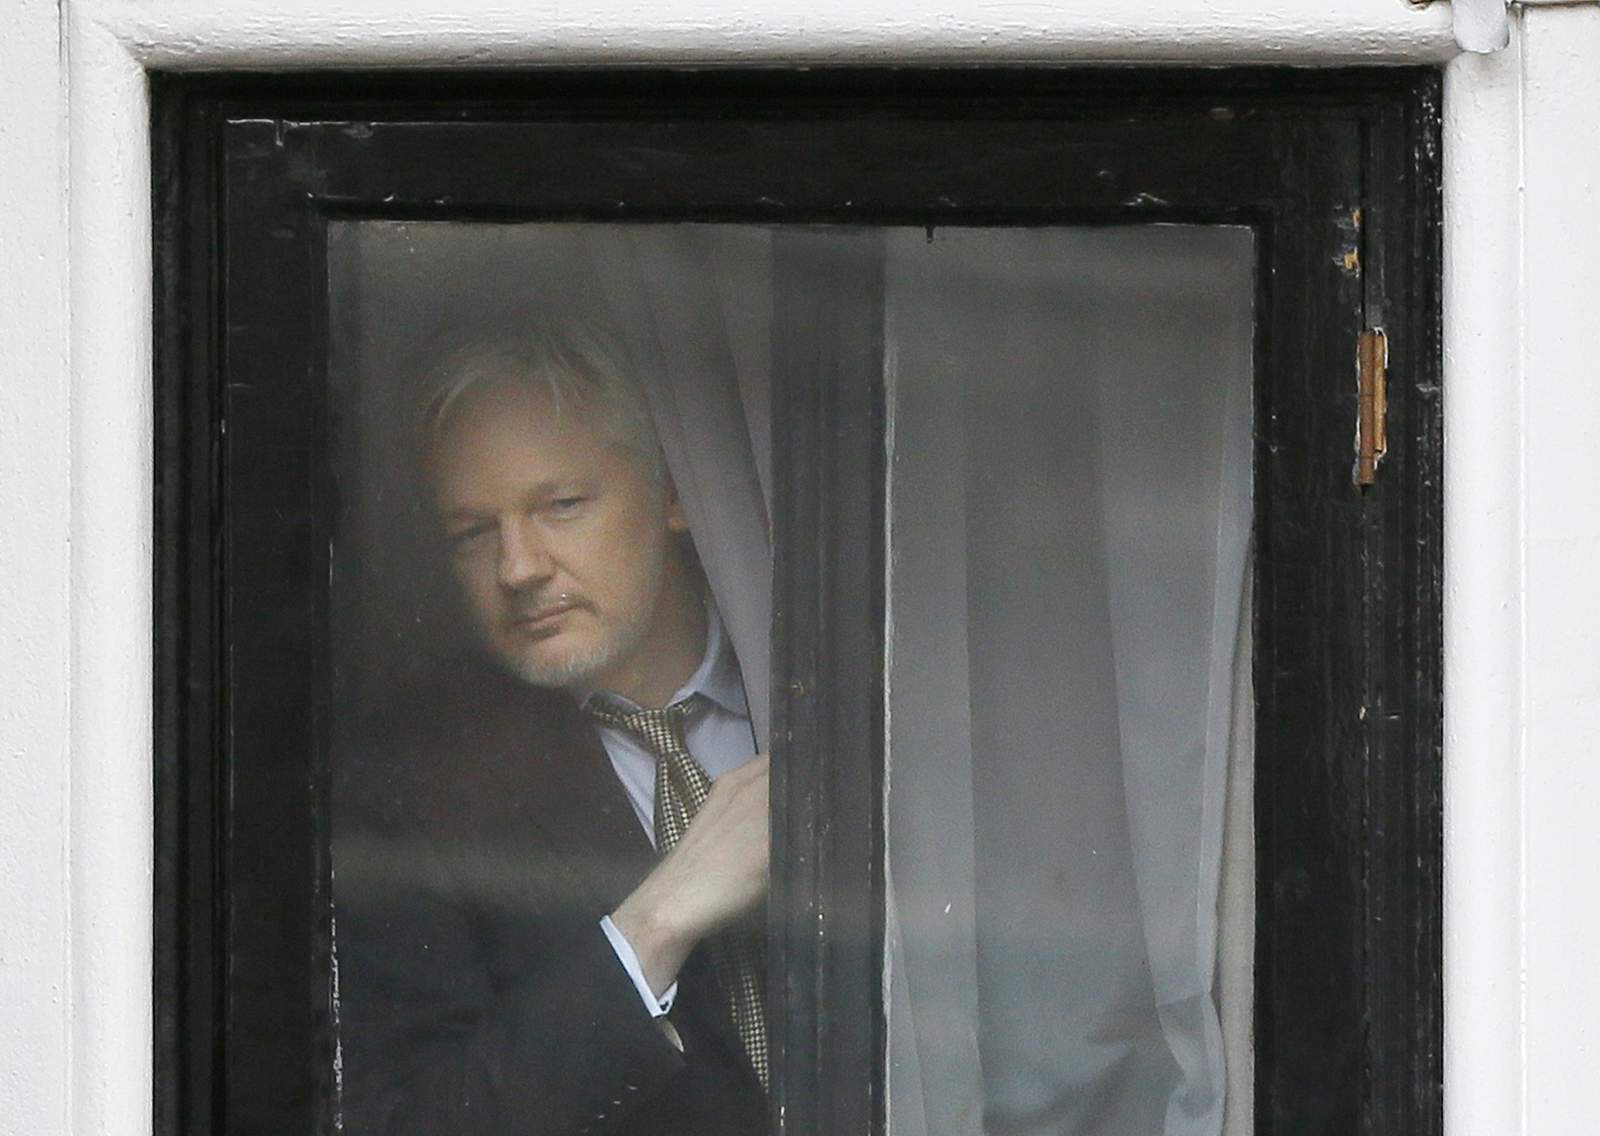 Assange bugged while at Ecuadorian Embassy, UK court told